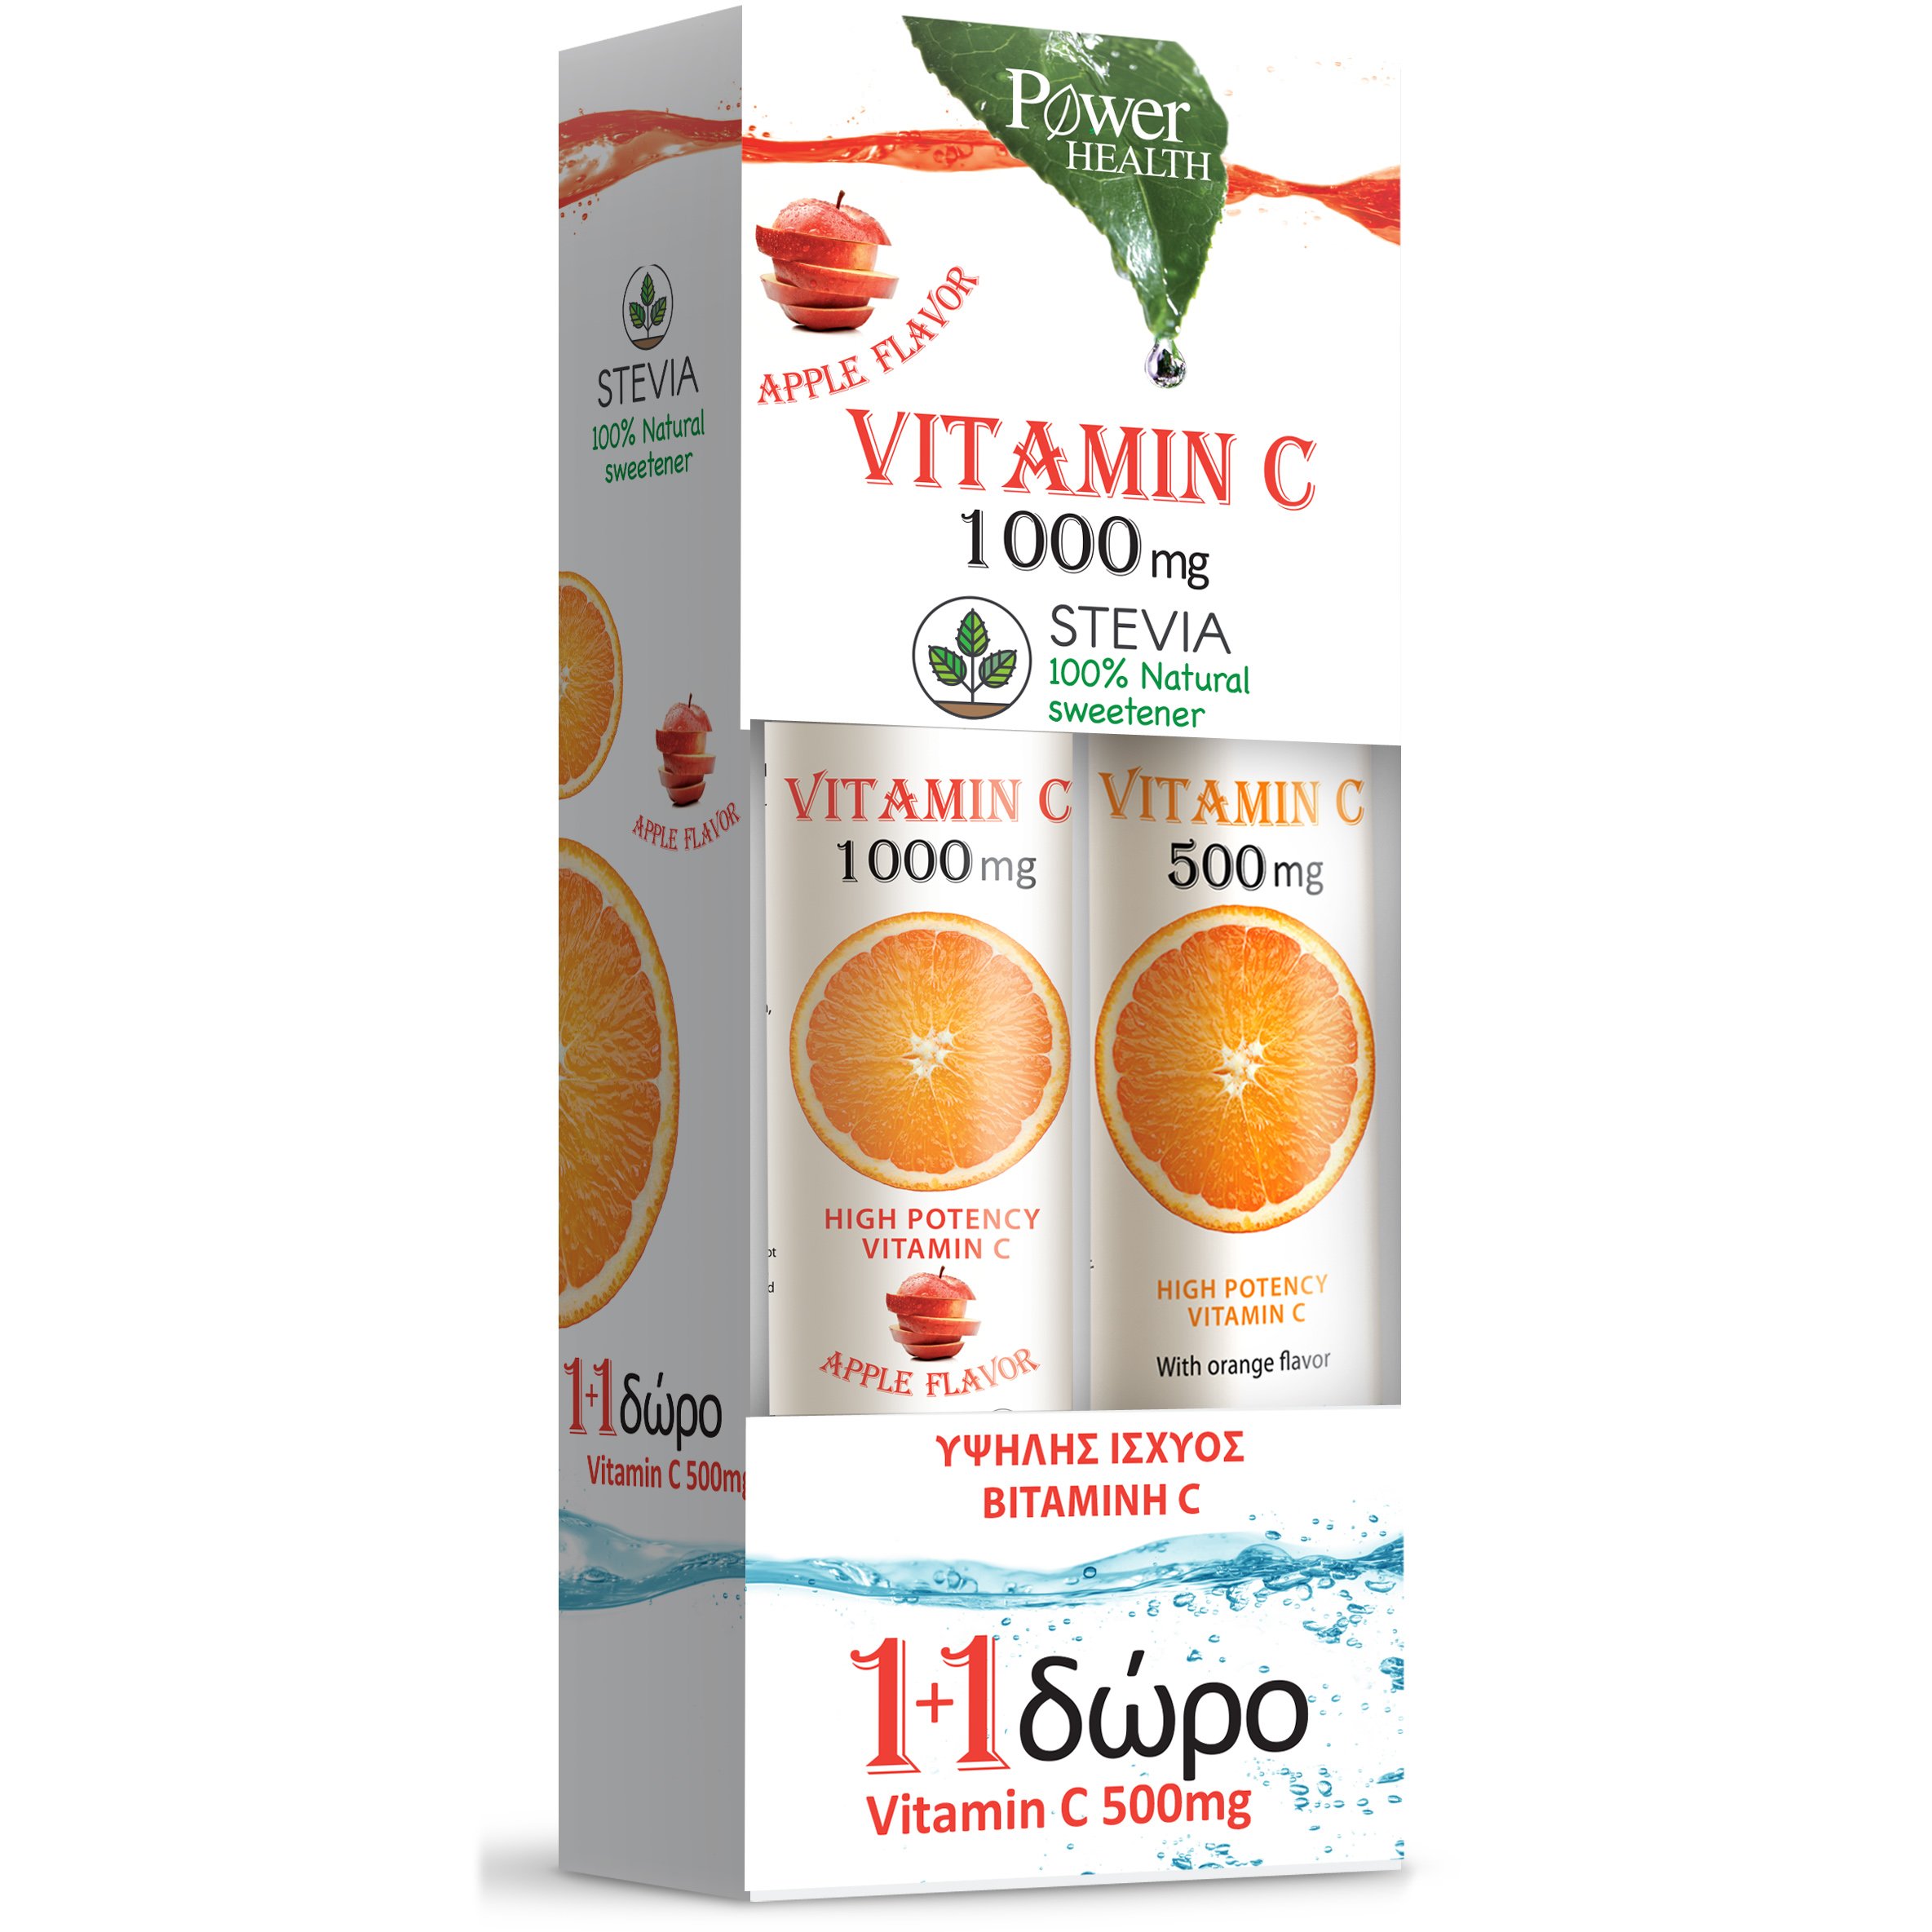 Power Health Vitamin C 1000mg Stevia Apple Flavor 24Effer.Tabs & Vitamin C 500mg Orange Flavor 20Effer.Tabs 1+1 Δώρο